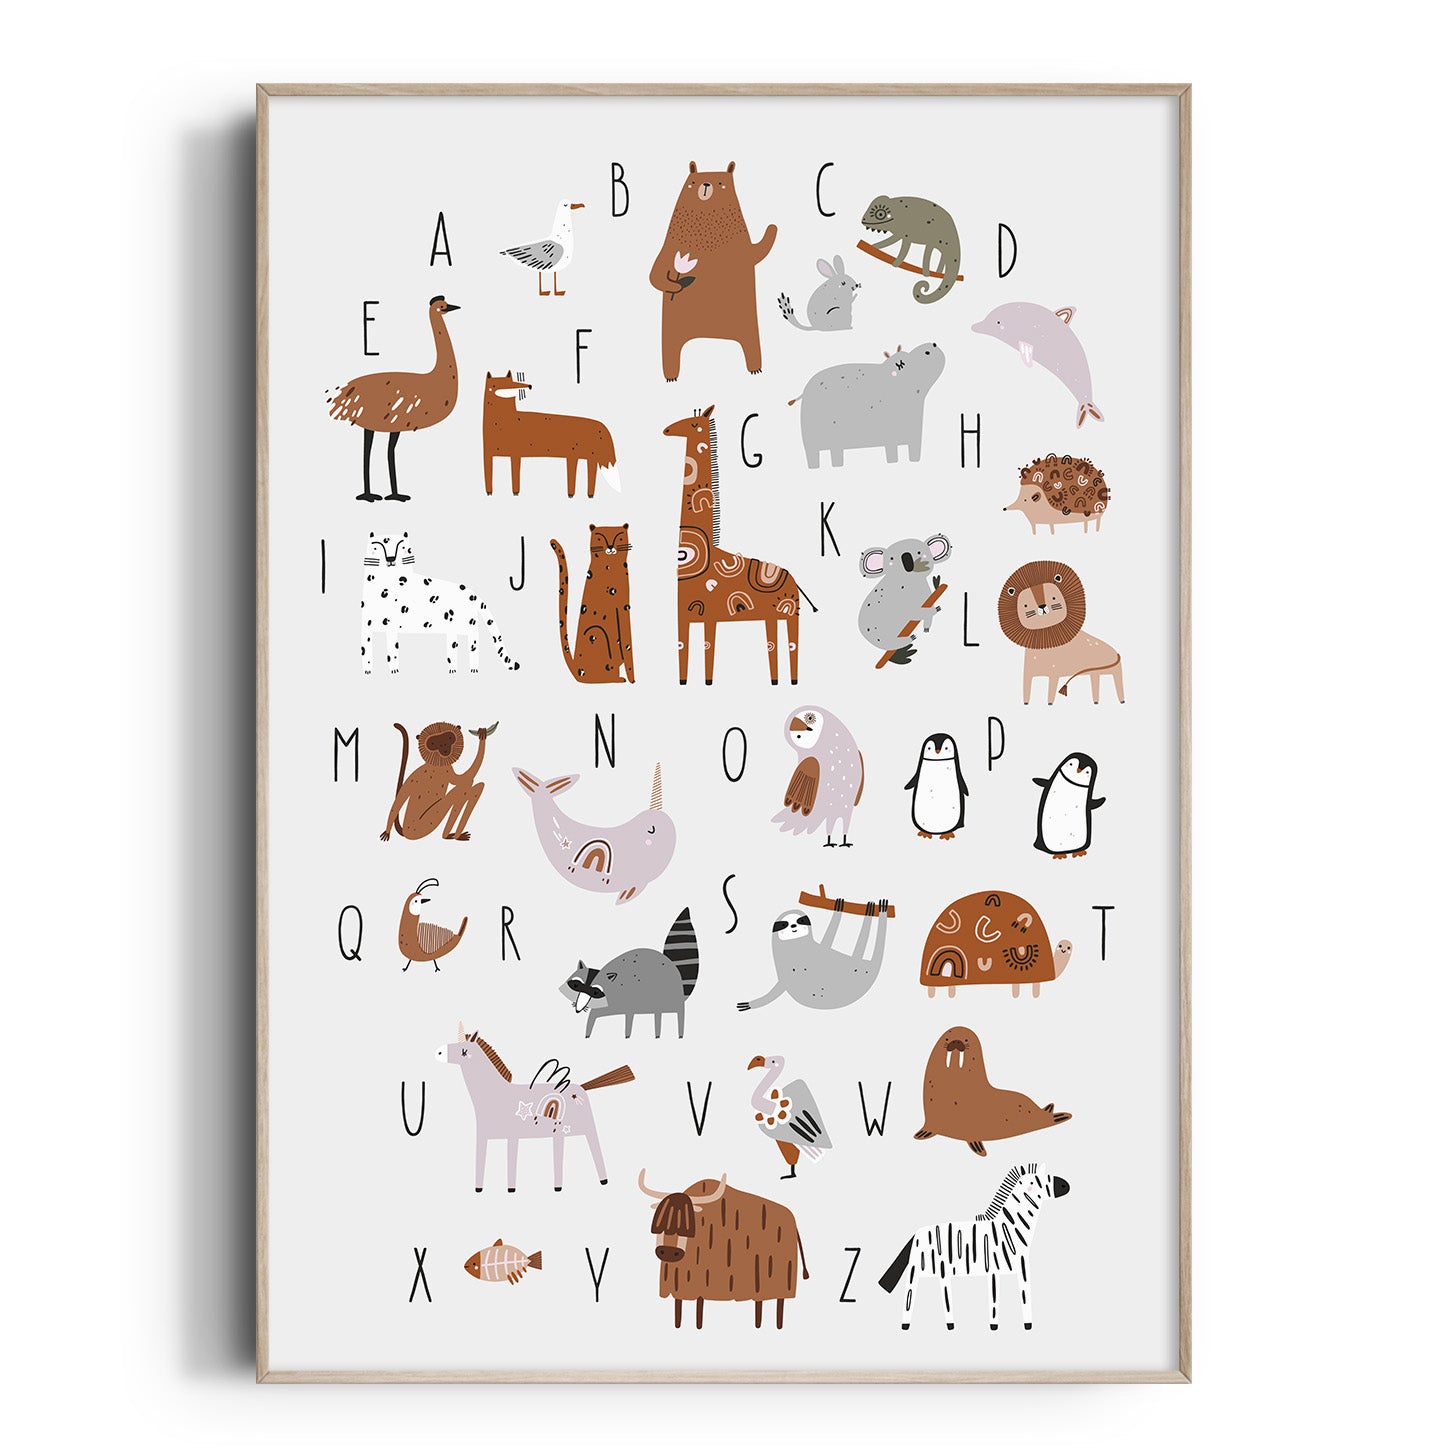 Animals Of The World Alphabet Poster